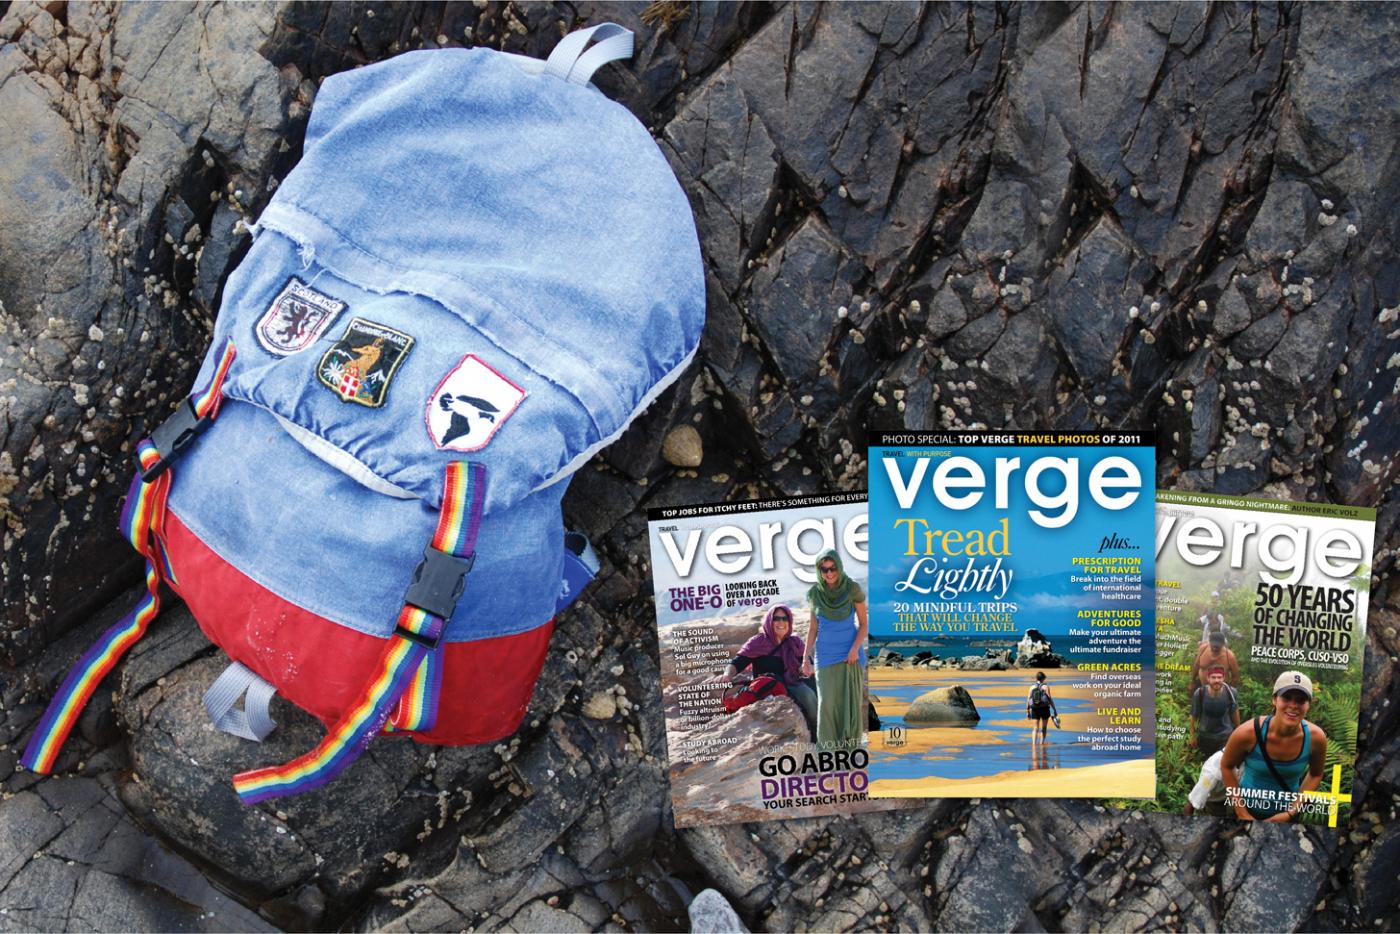 About Verge Magazine